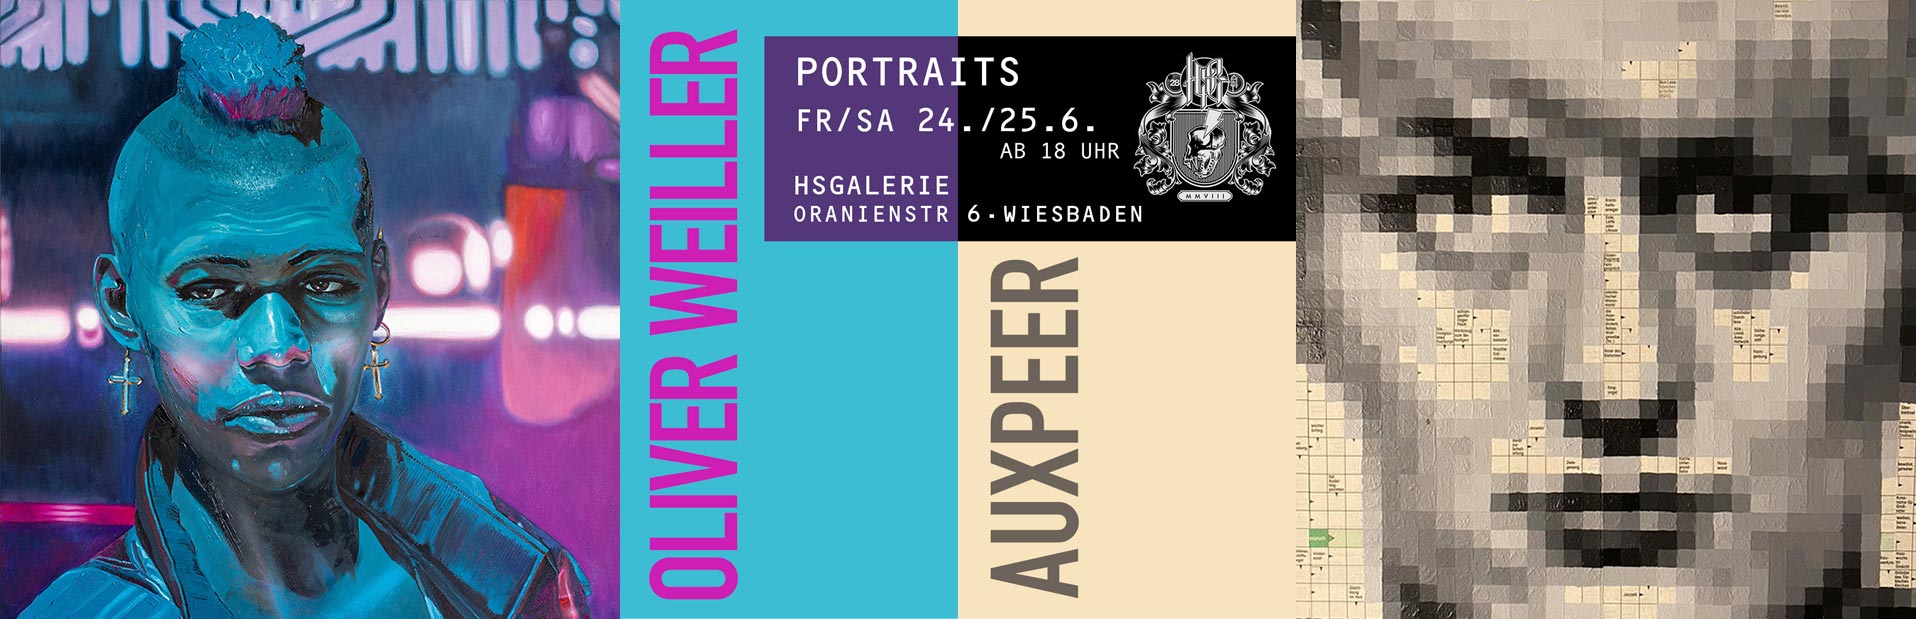 banner_Portraits_2022-weiller-auxpeer